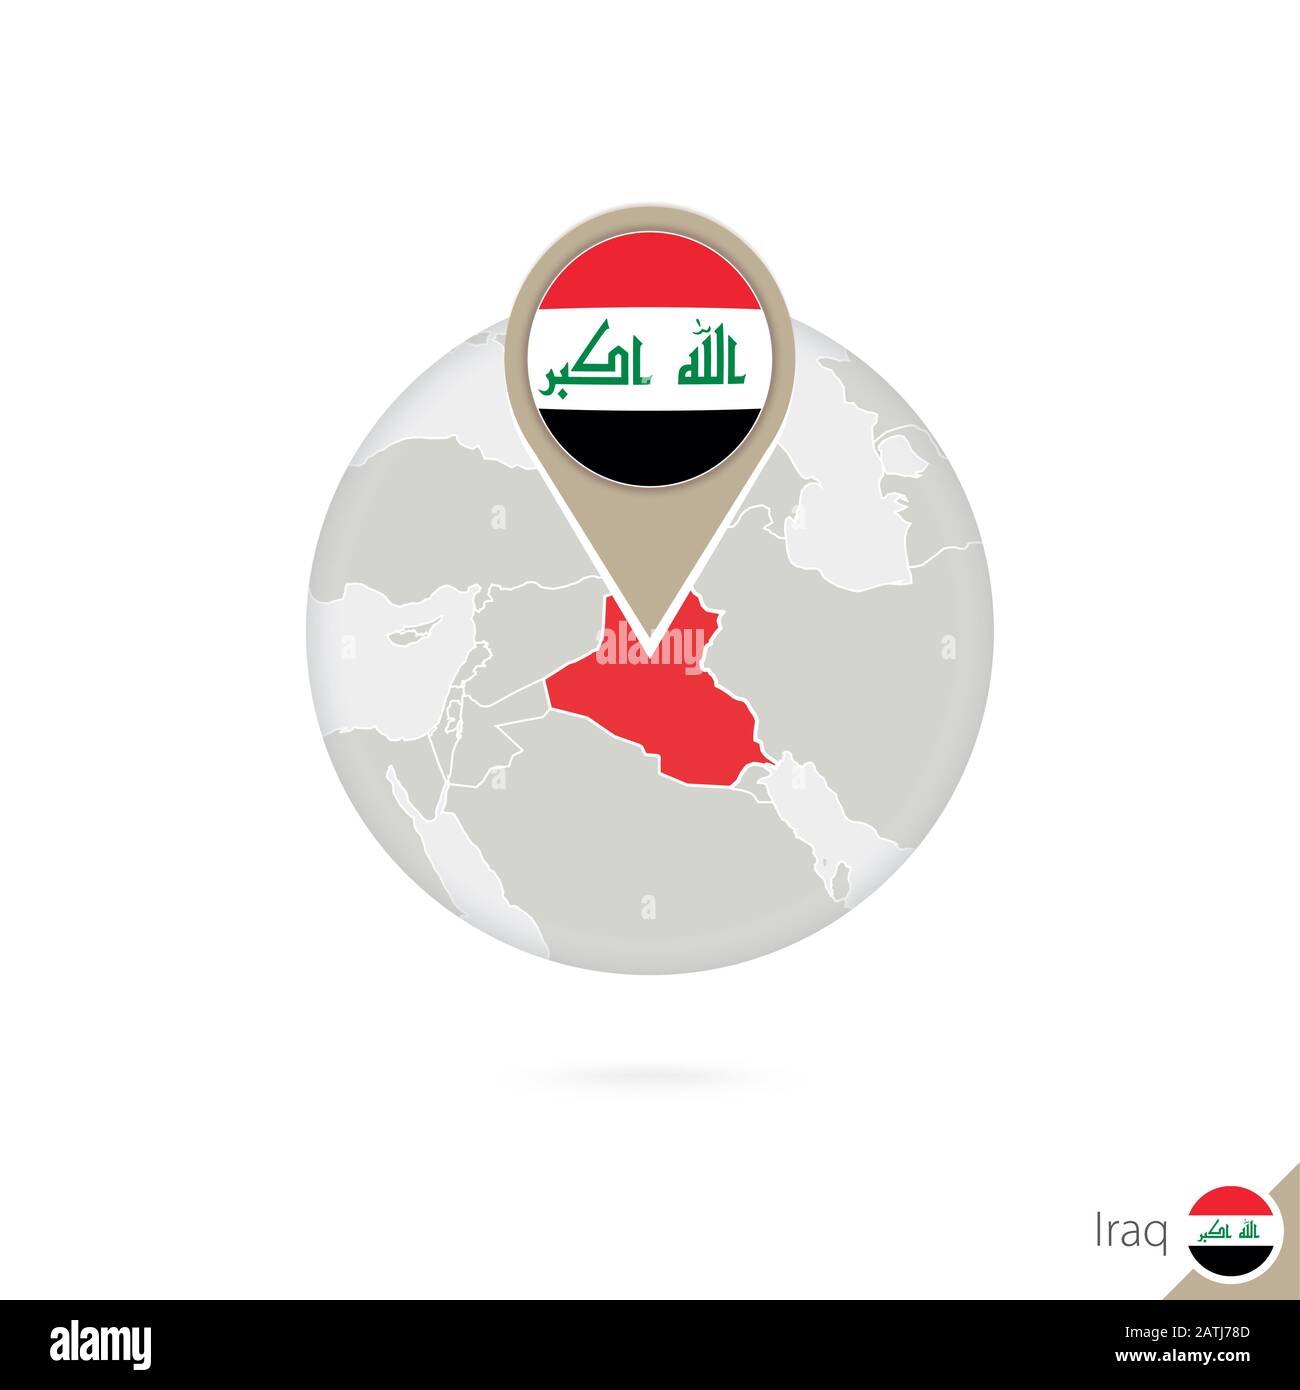 Irak-Karte und Flagge im Kreis. Karte des Irak, Flaggennadel des Irak. Karte des Irak im Stil des Erdballs. Vektorgrafiken. Stock Vektor